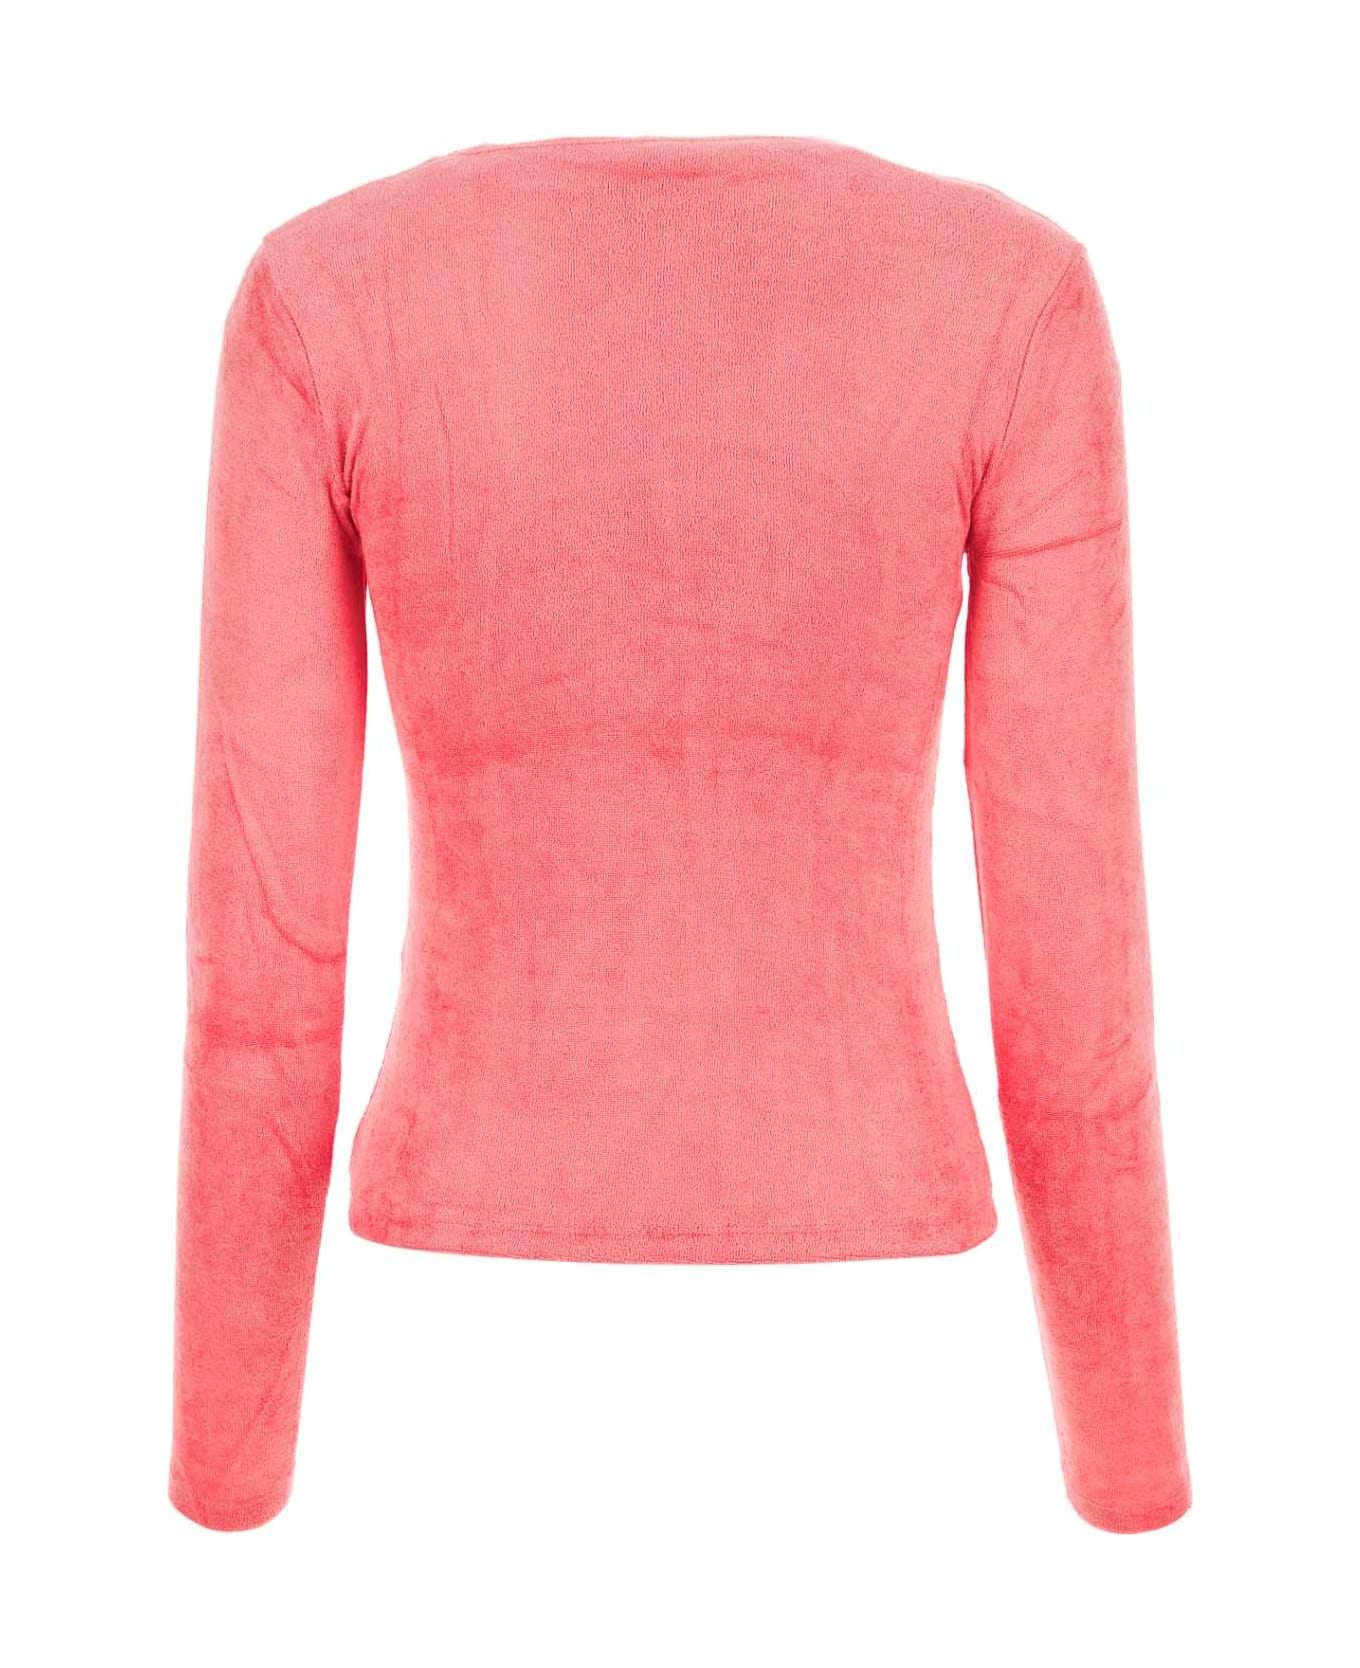 Baserange Pink Terry Fabric T-shirt - ZUIPINK Tシャツ